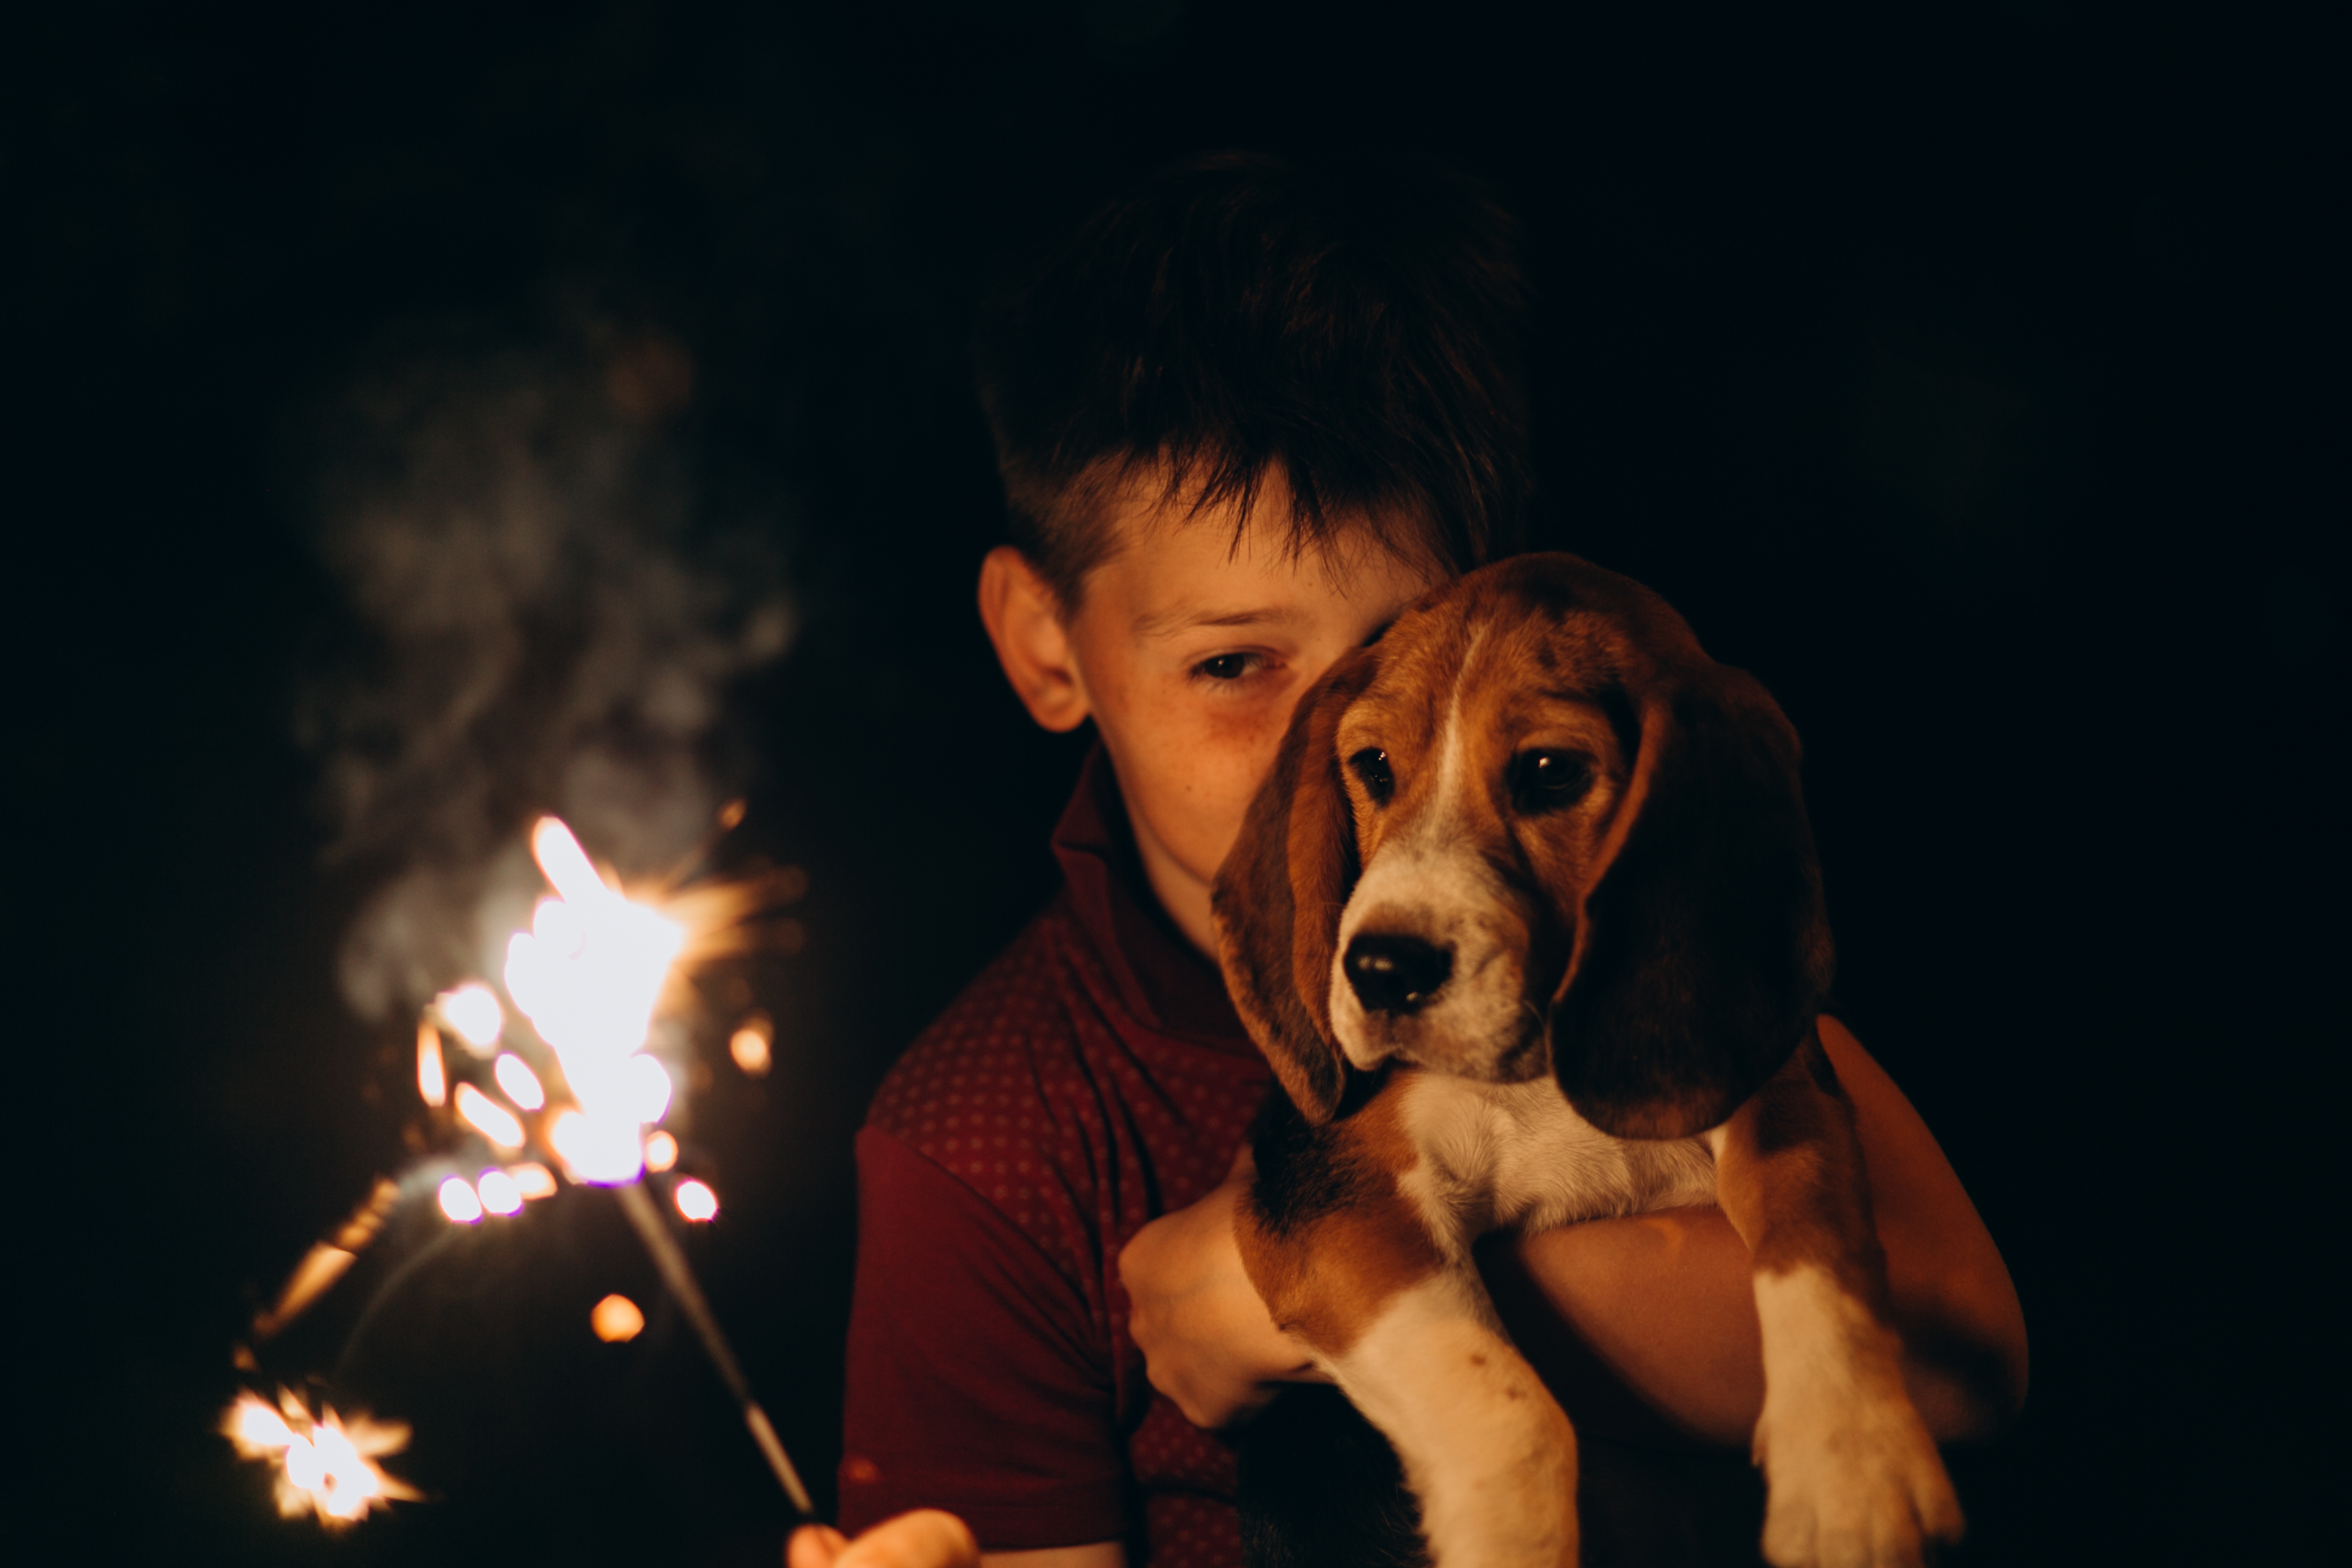 Boy holds dog in darkness | Source: Shutterstock.com